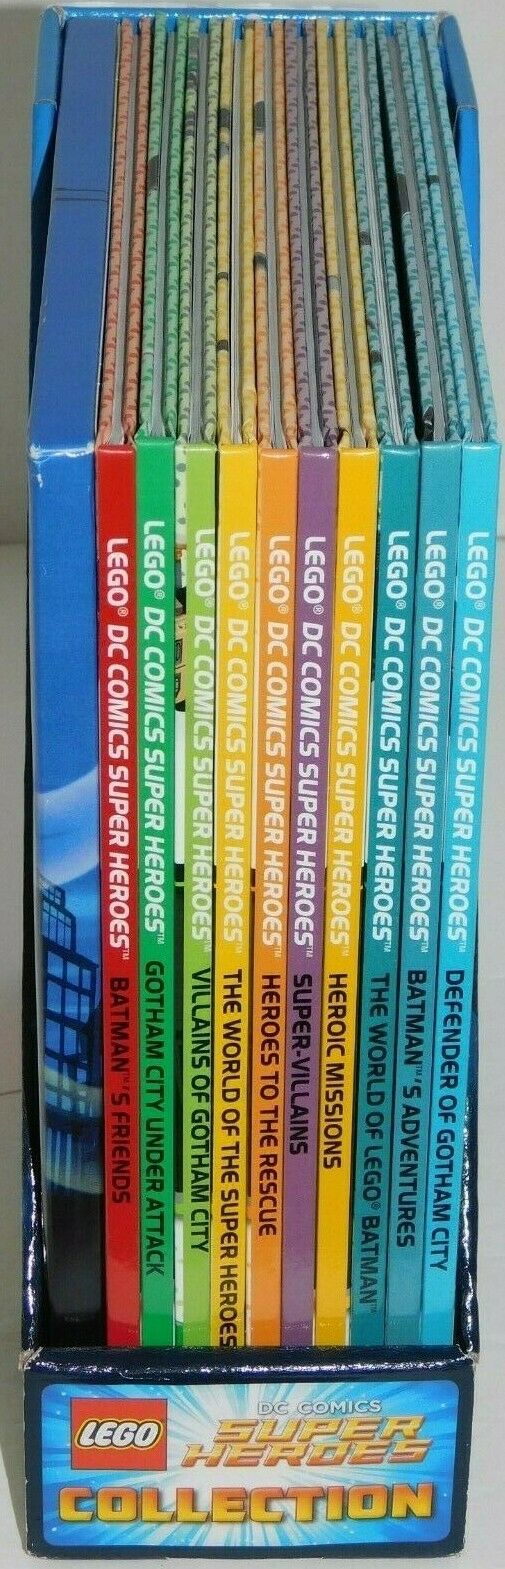 LEGO DC Comics Collection 10 Books with Batman Electrosuit Minifigure - Age 6+ - Hardback 5-7 DK